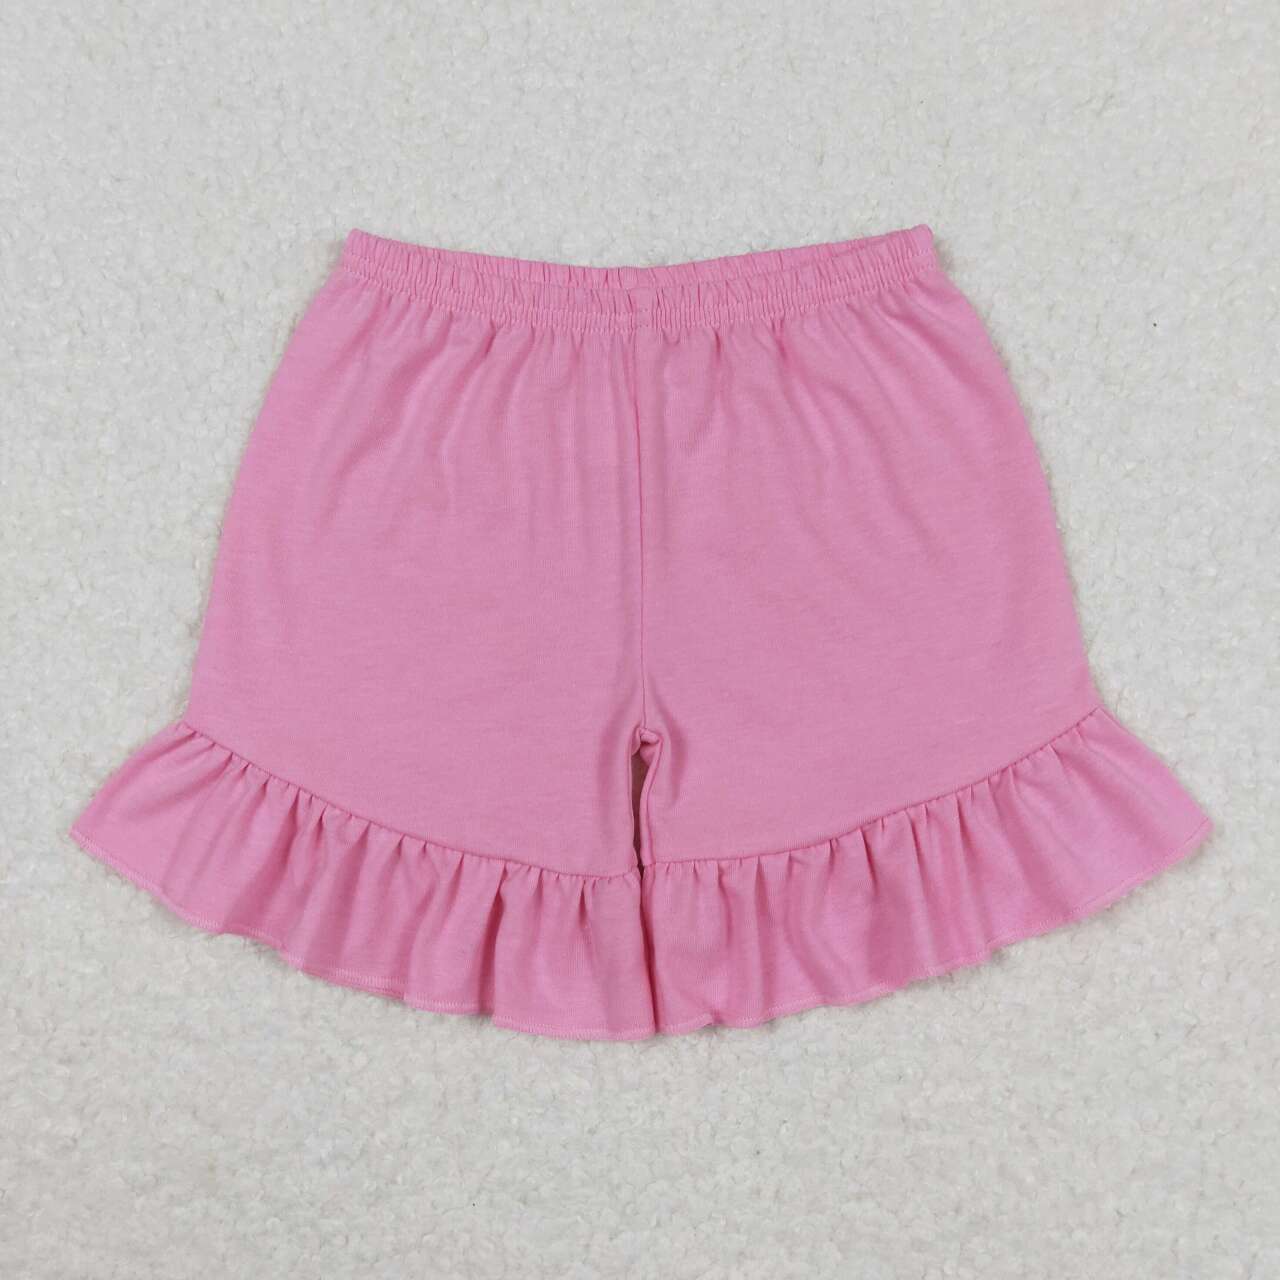 SS0271 Pink lace shorts